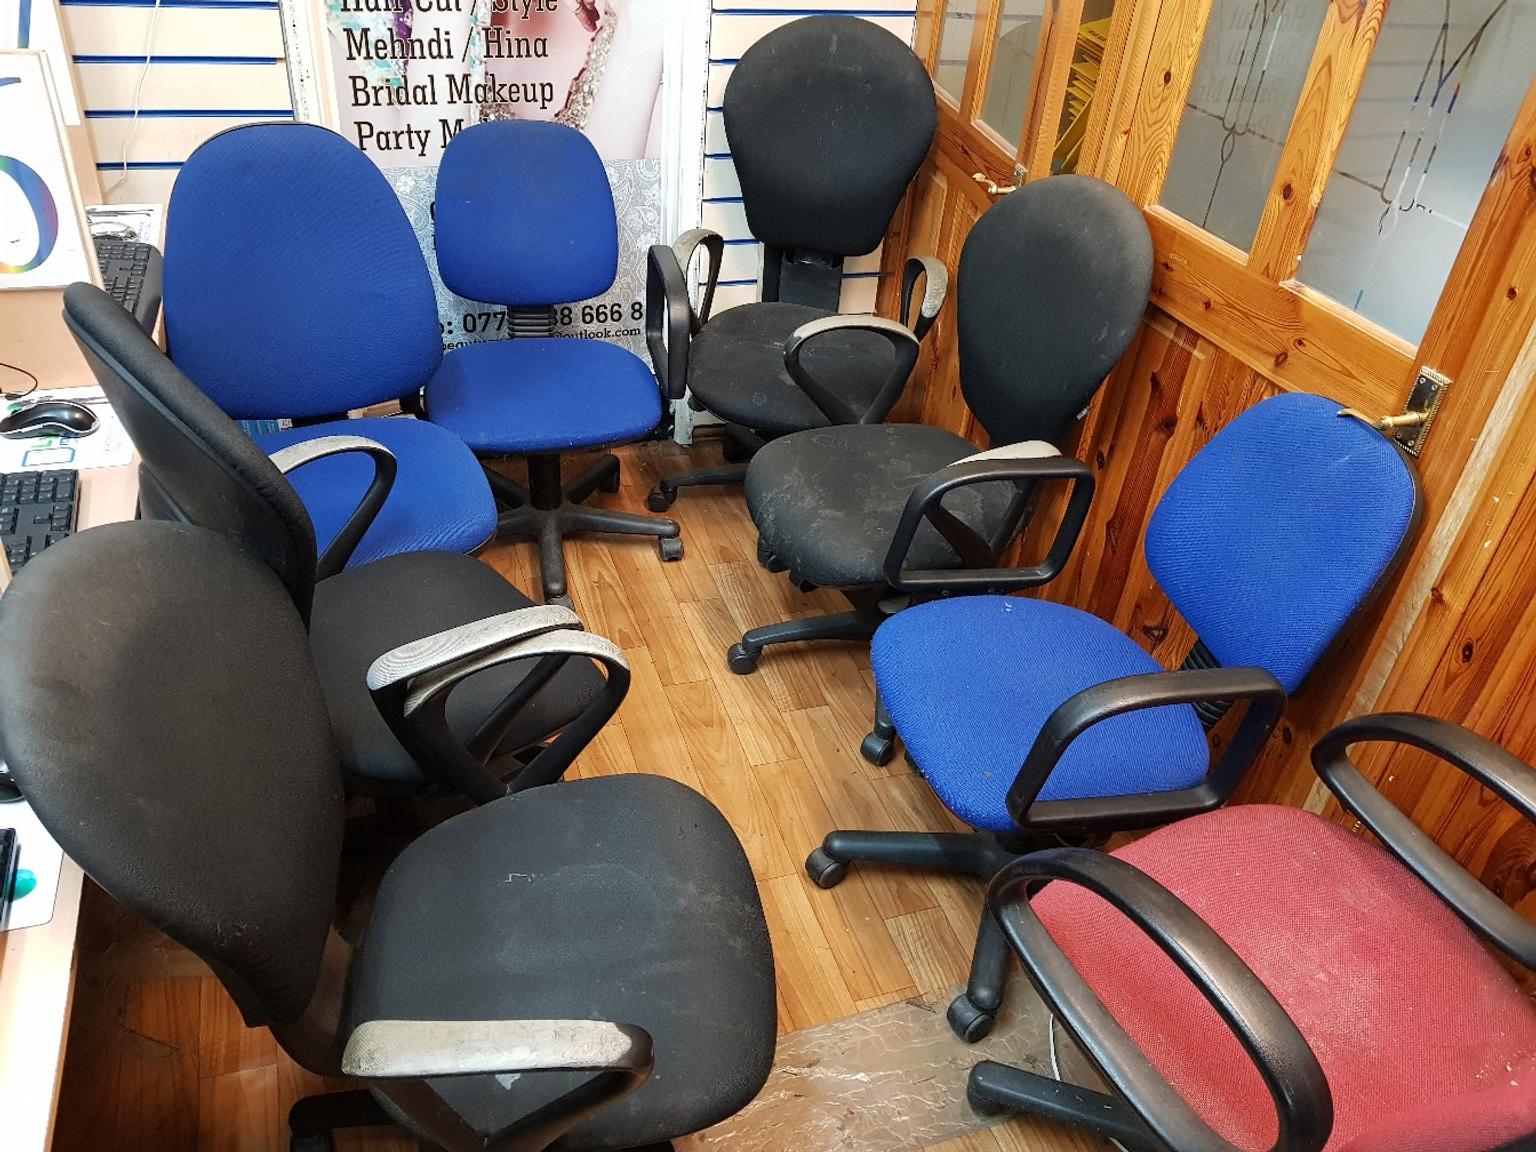 10 Adjustable Computer Office Chairs In B66 Sandwell Fur 80 00 Zum Verkauf Shpock De